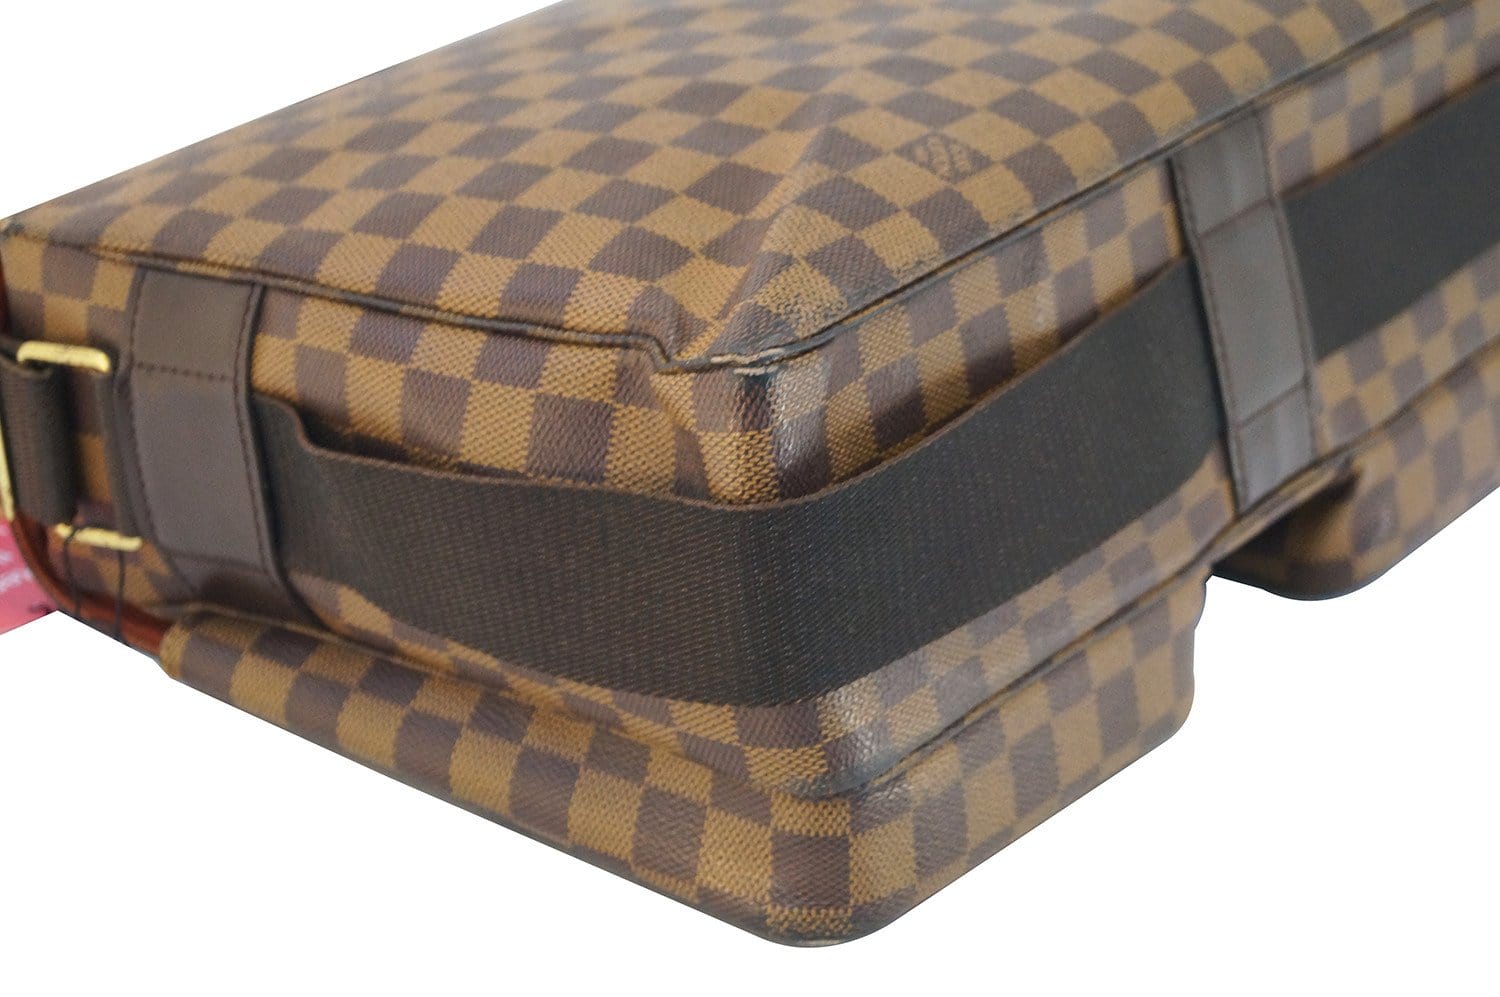 Pre-Owned Louis Vuitton Broadway Damier Ebene Shoulder Bag - Very Good  Condition 